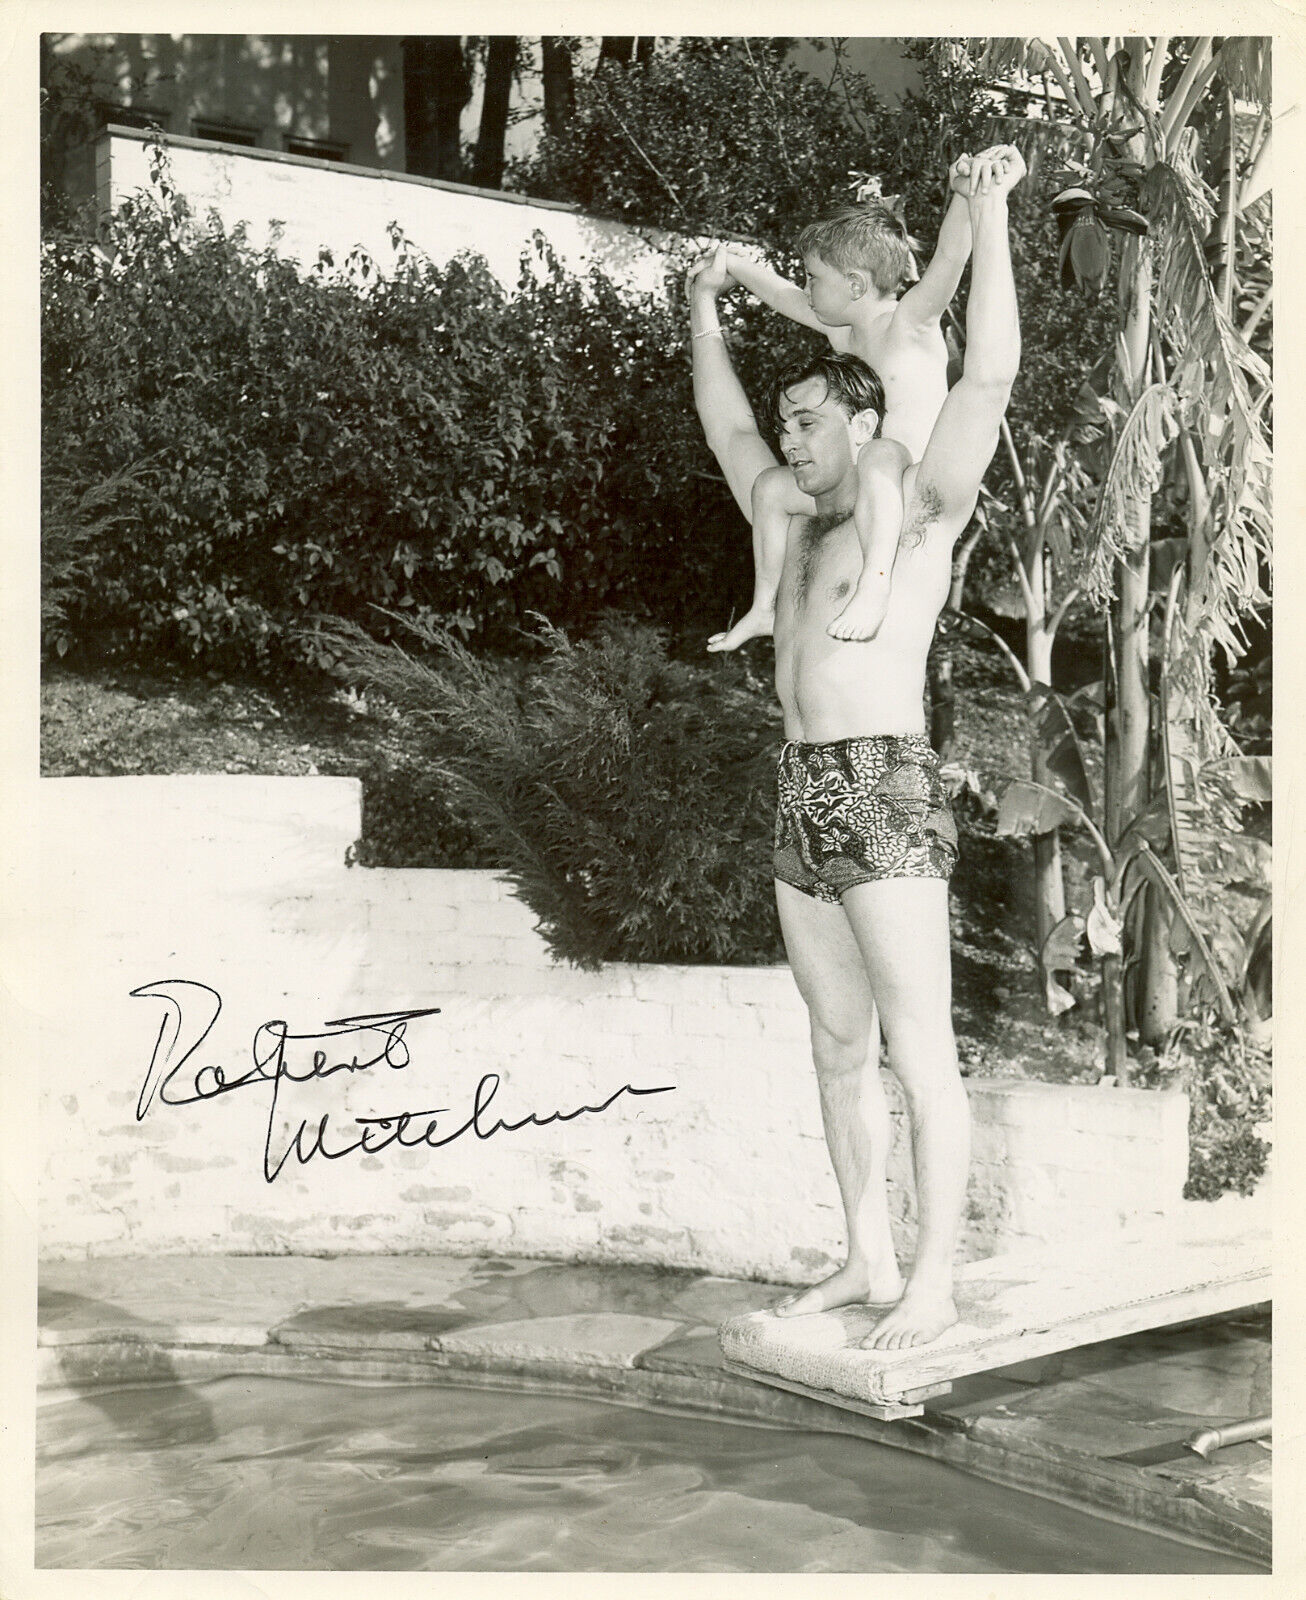 ROBERT MITCHUM Signed 'Swimming Trunks' Photo Poster paintinggraph - Film Star Actor - Preprint